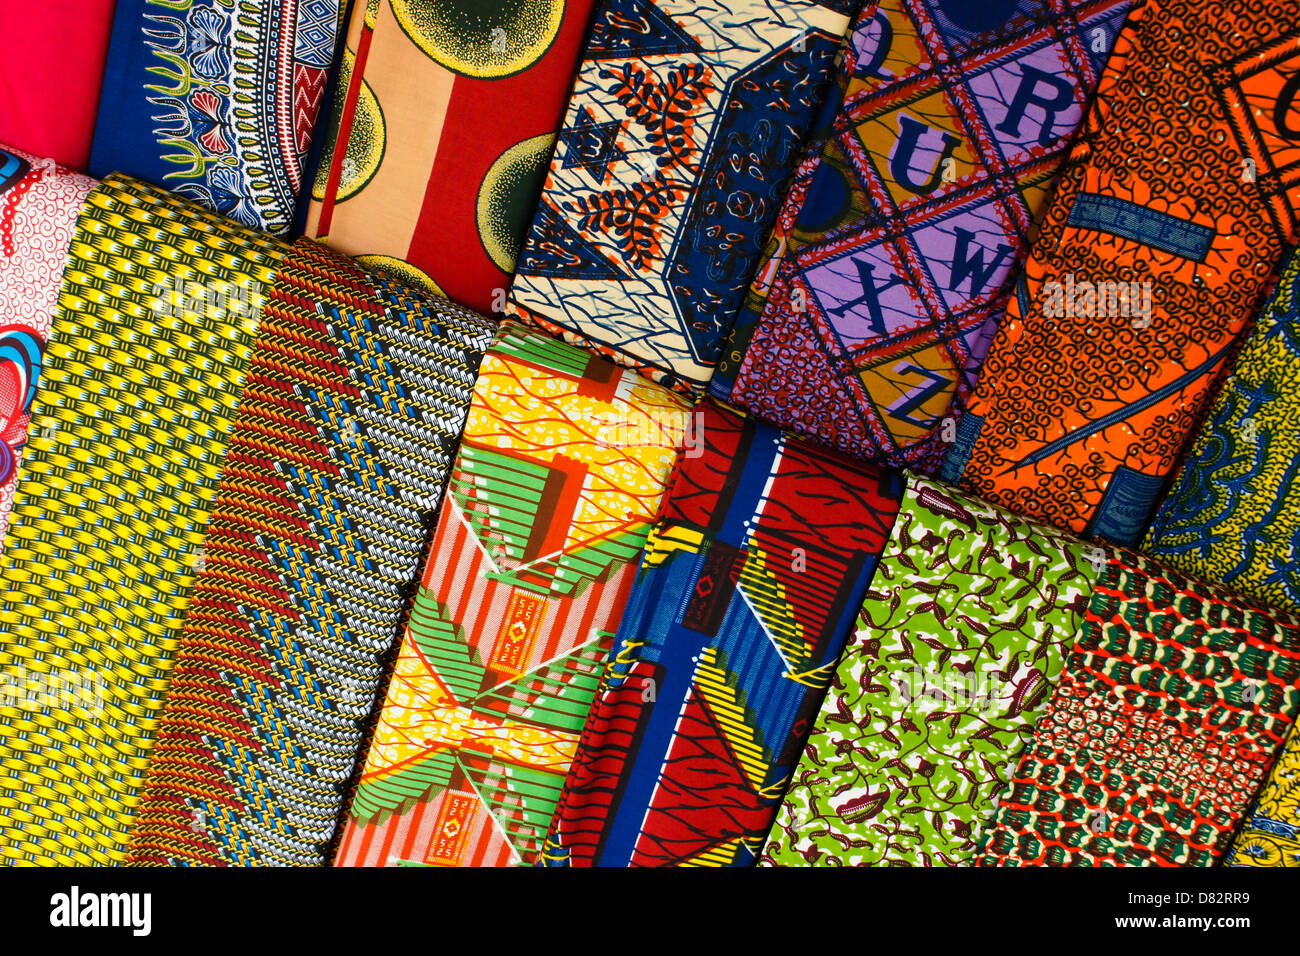 Wax print textiles, Ghana Stock Photo